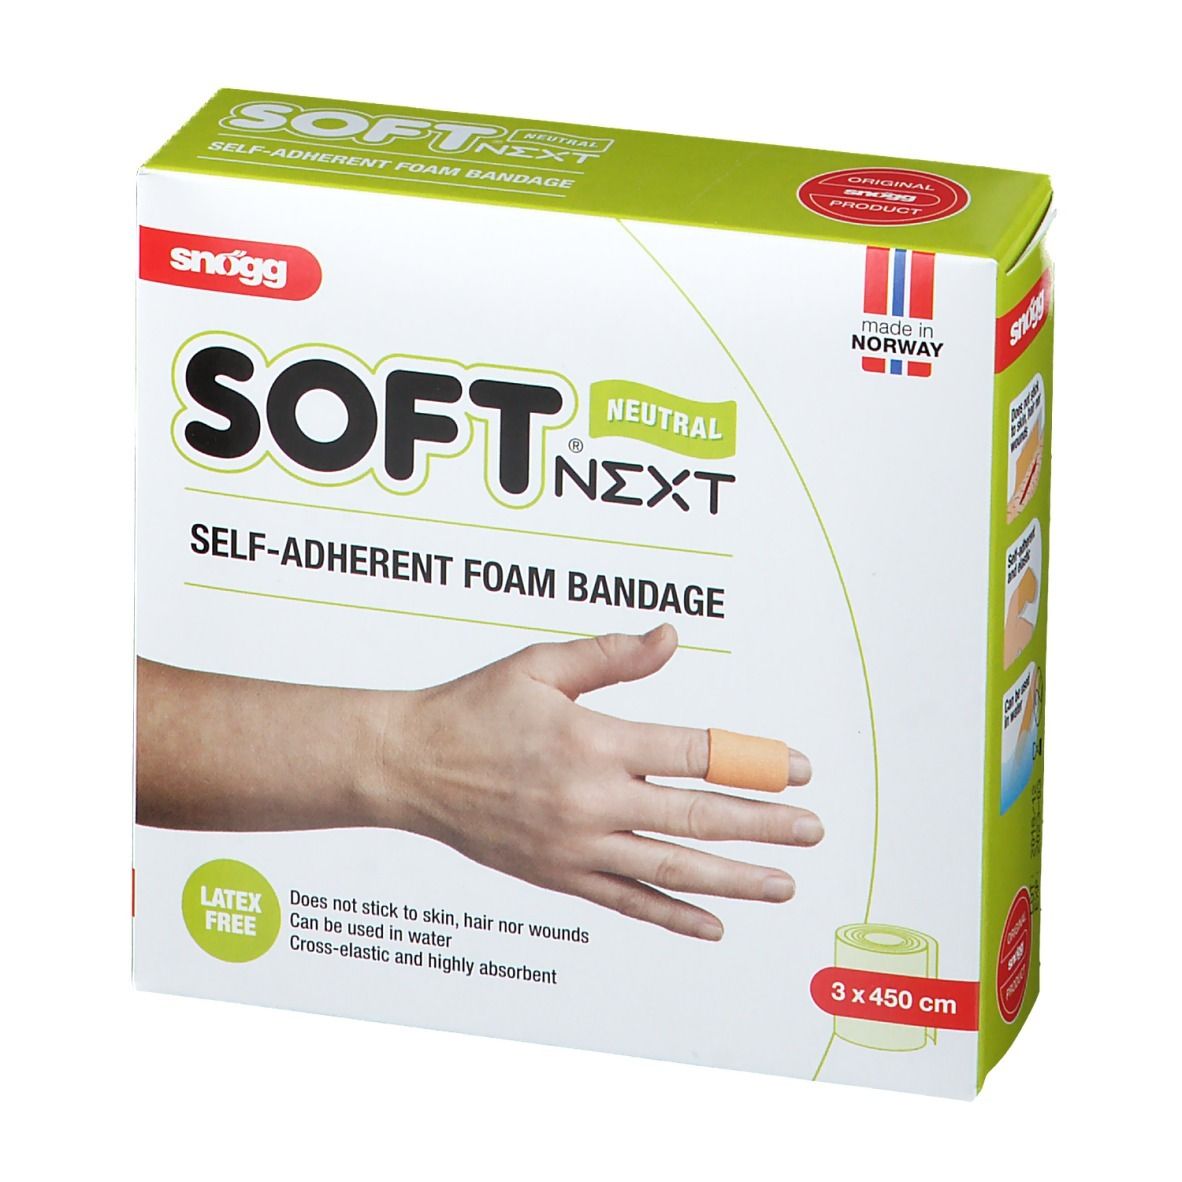 Soft® Snogg Next Natural selbsthaftende Weichschaum-Bandage 3 x 450 cm